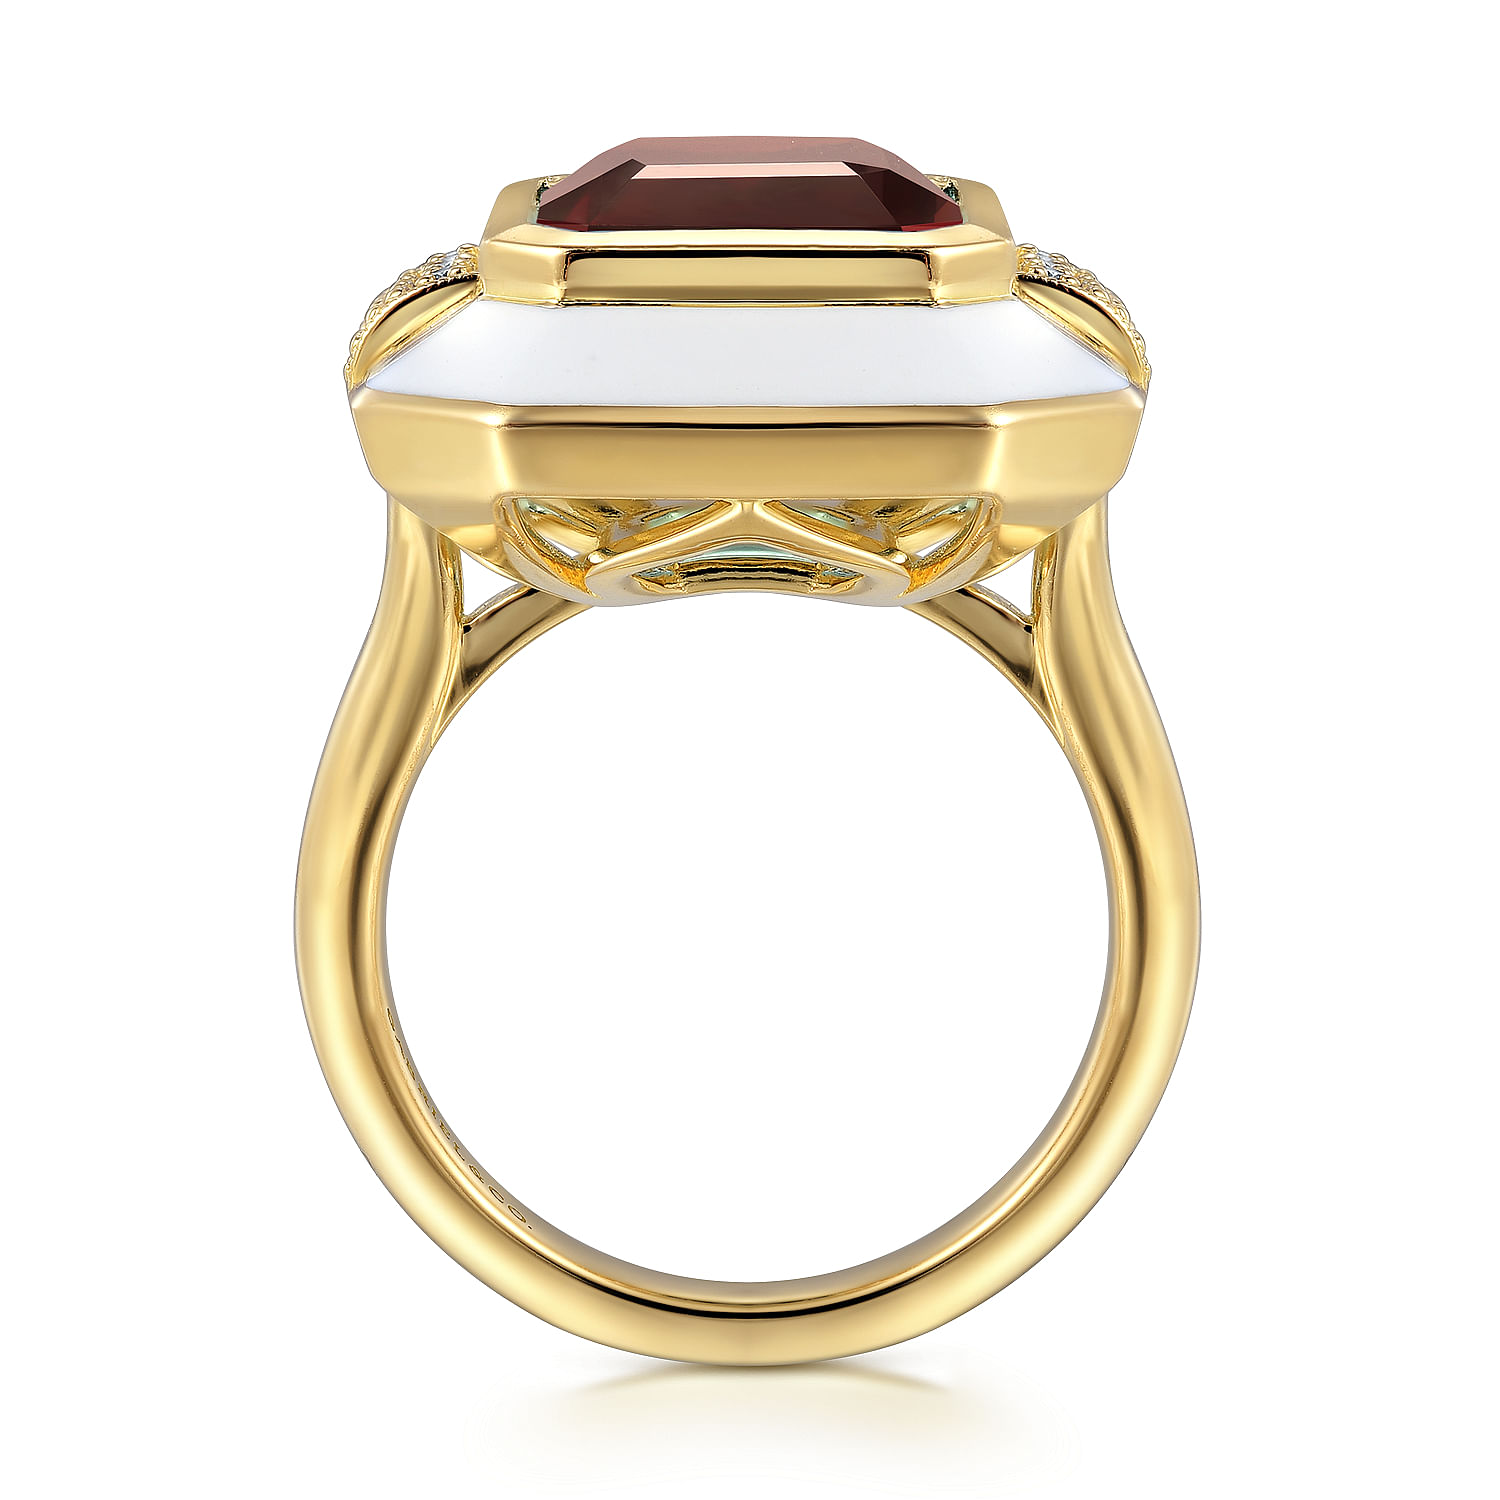 14K Yellow Gold Diamond and Emerald Cut Garnet Fashion Ring With White Enamel